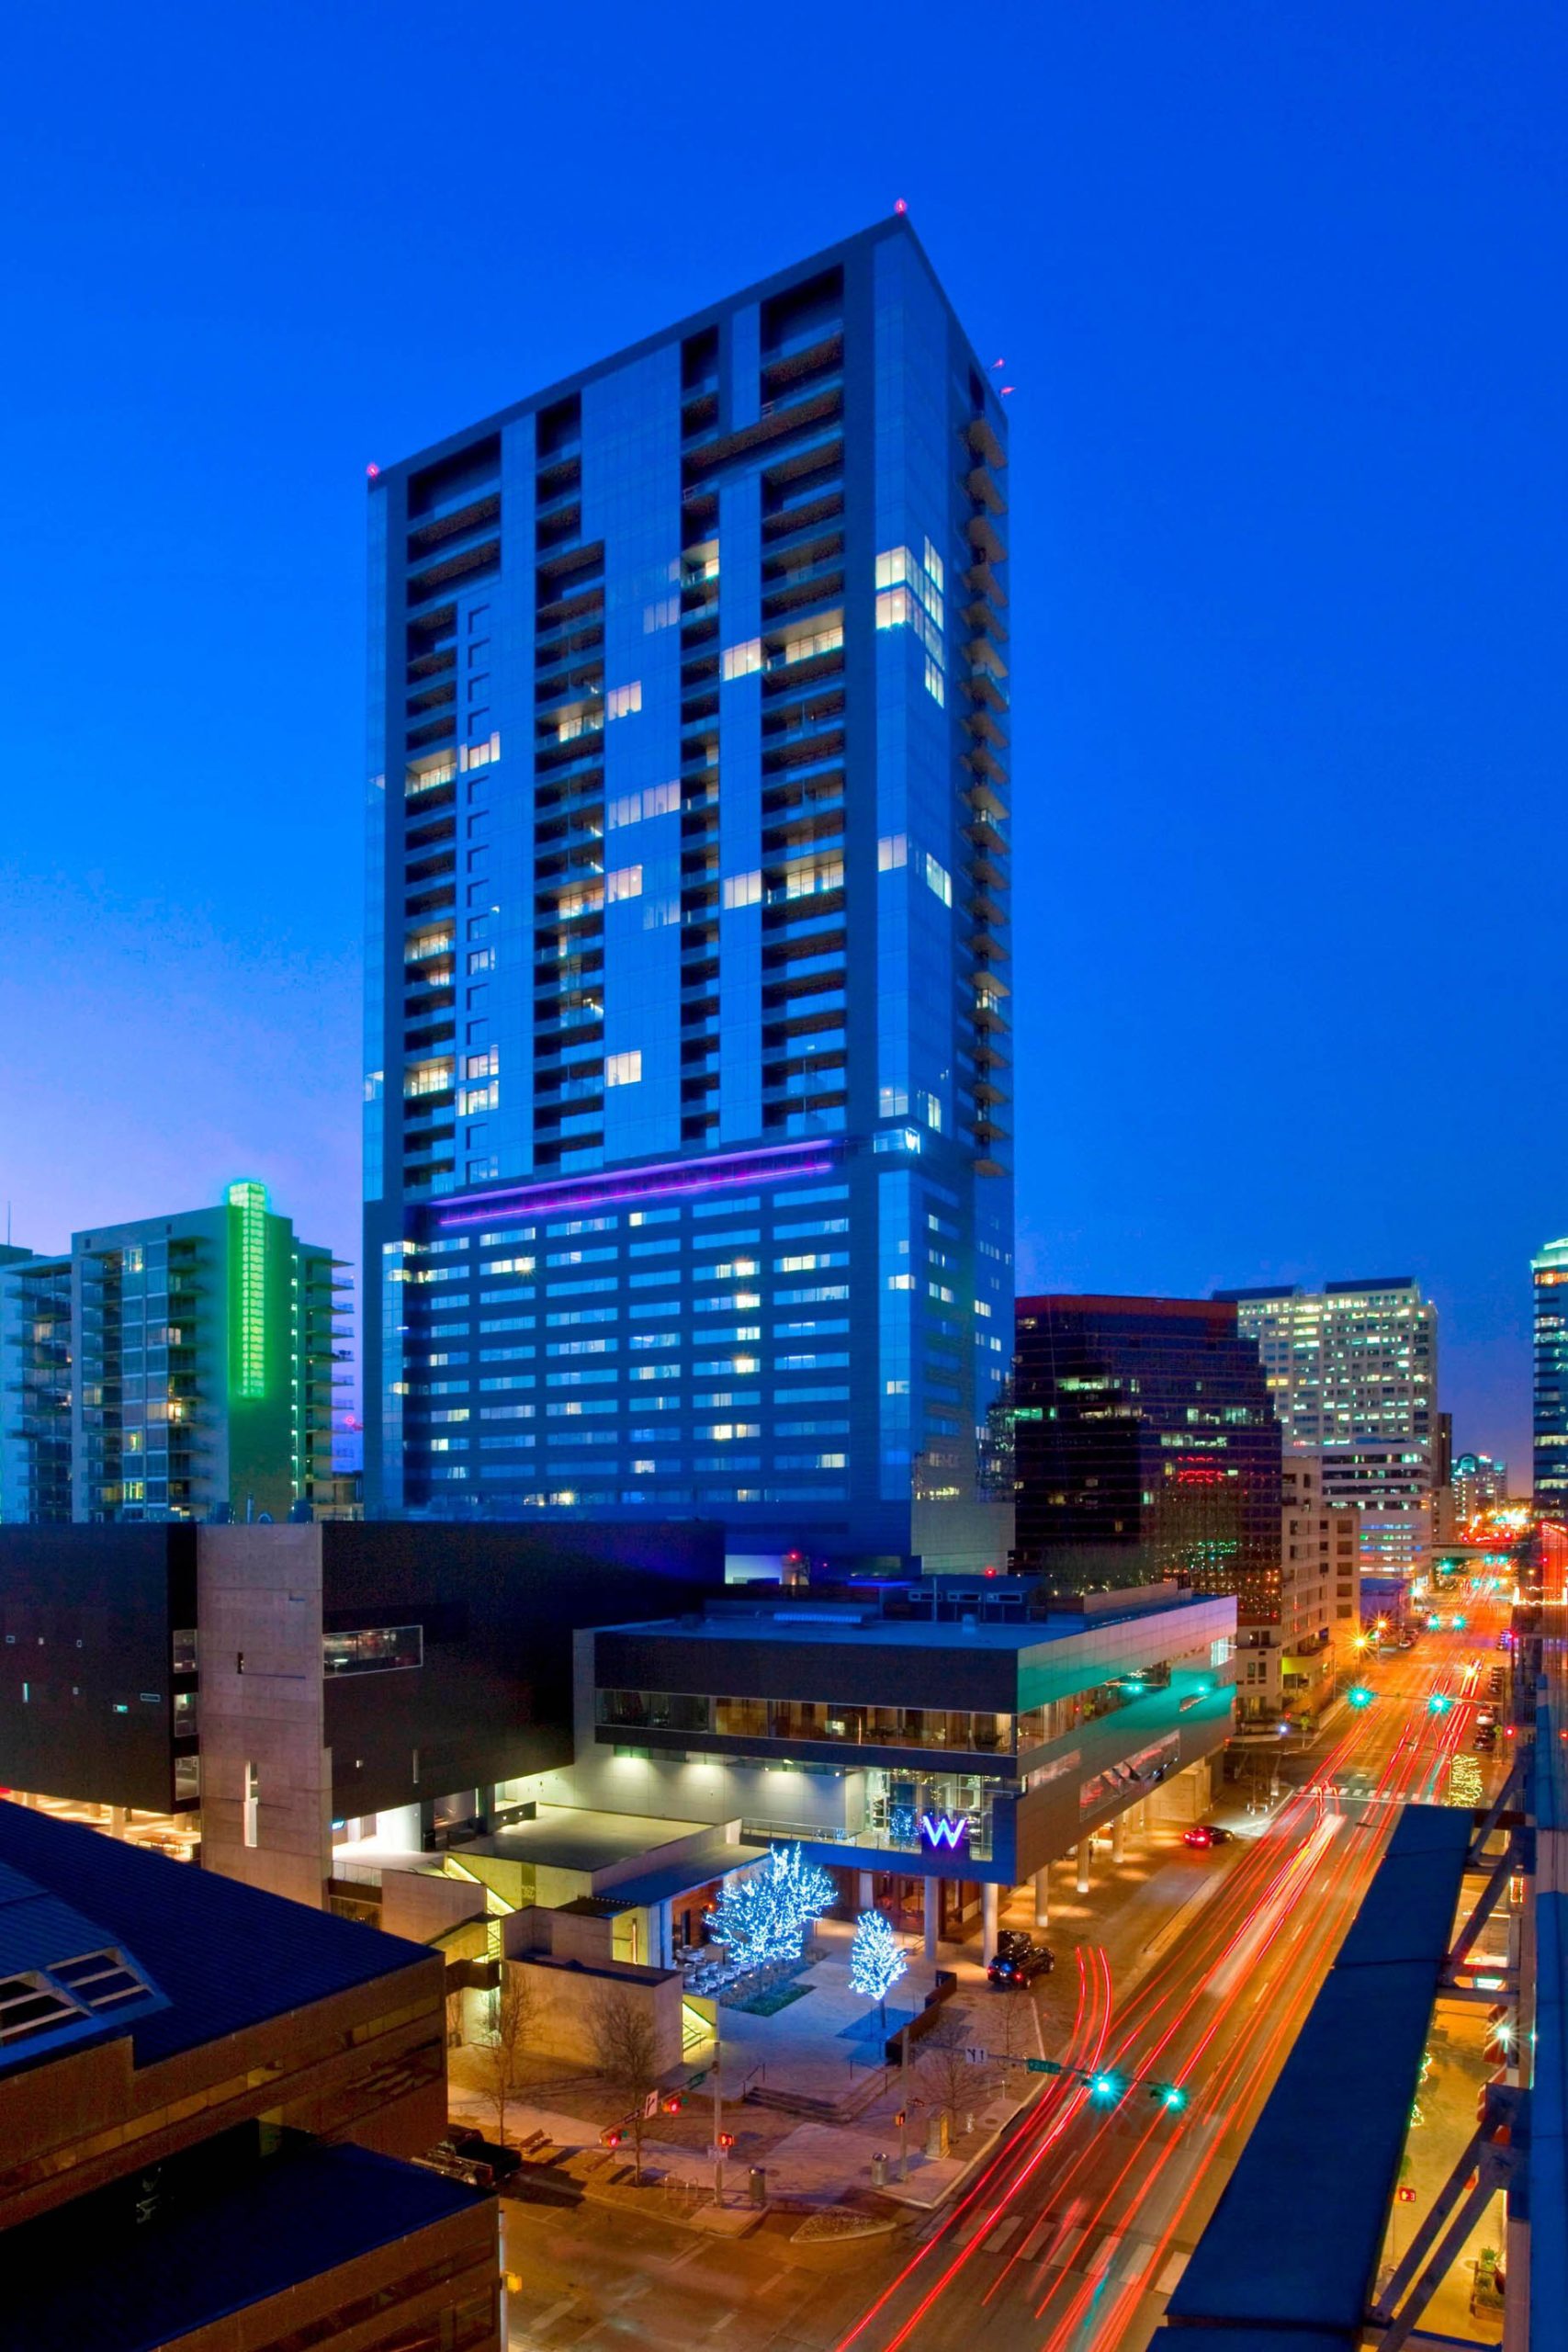 W Austin Hotel – Austin, TX, USA – Hotel Tower Night